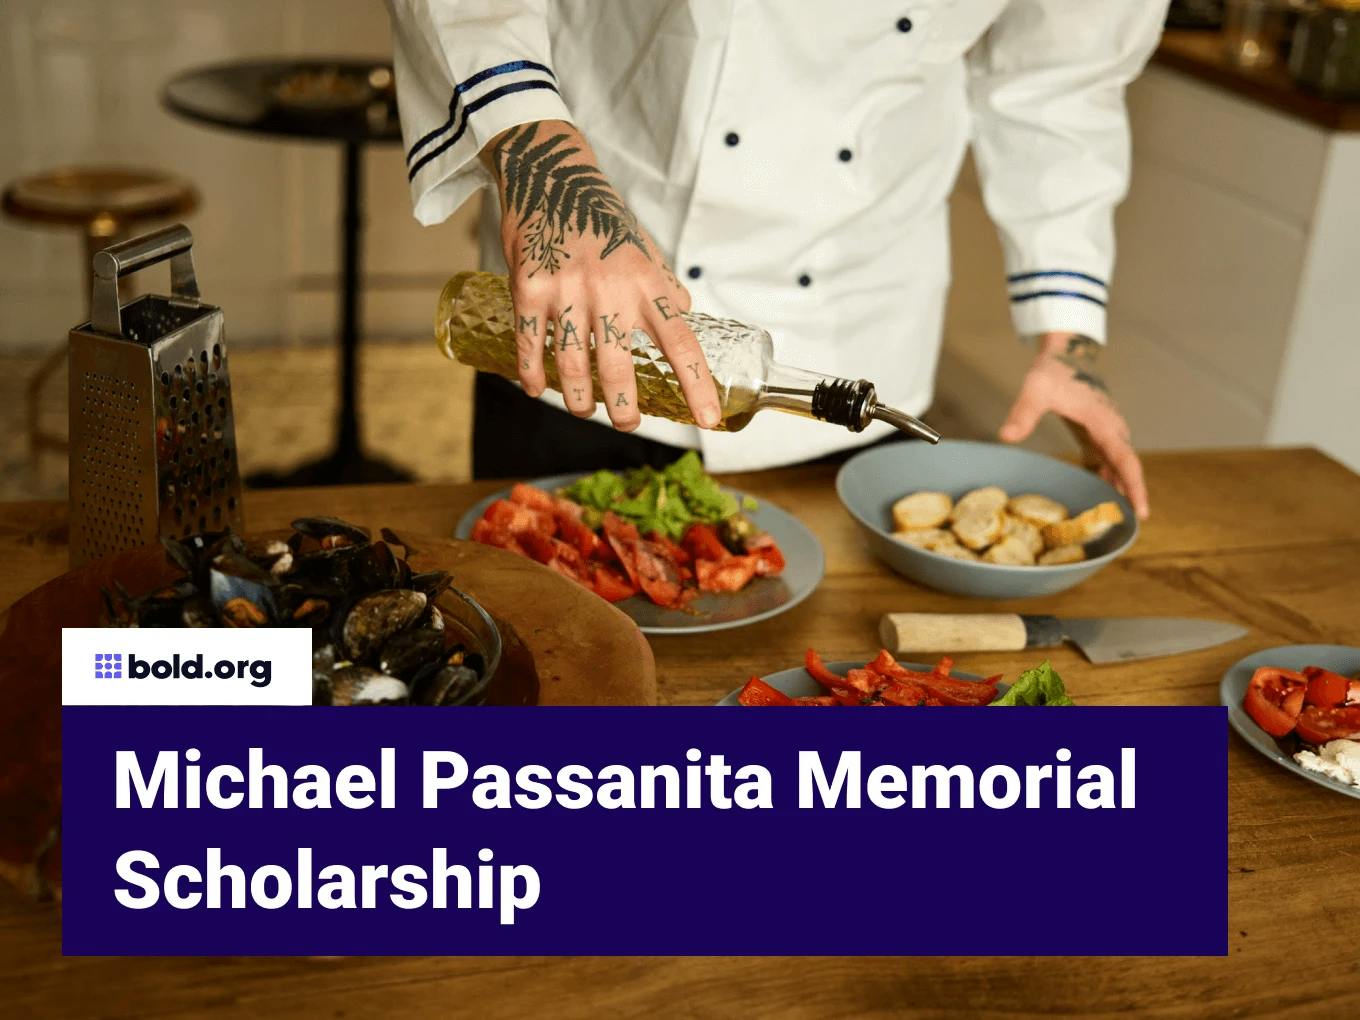 Michael Passanita Memorial Scholarship